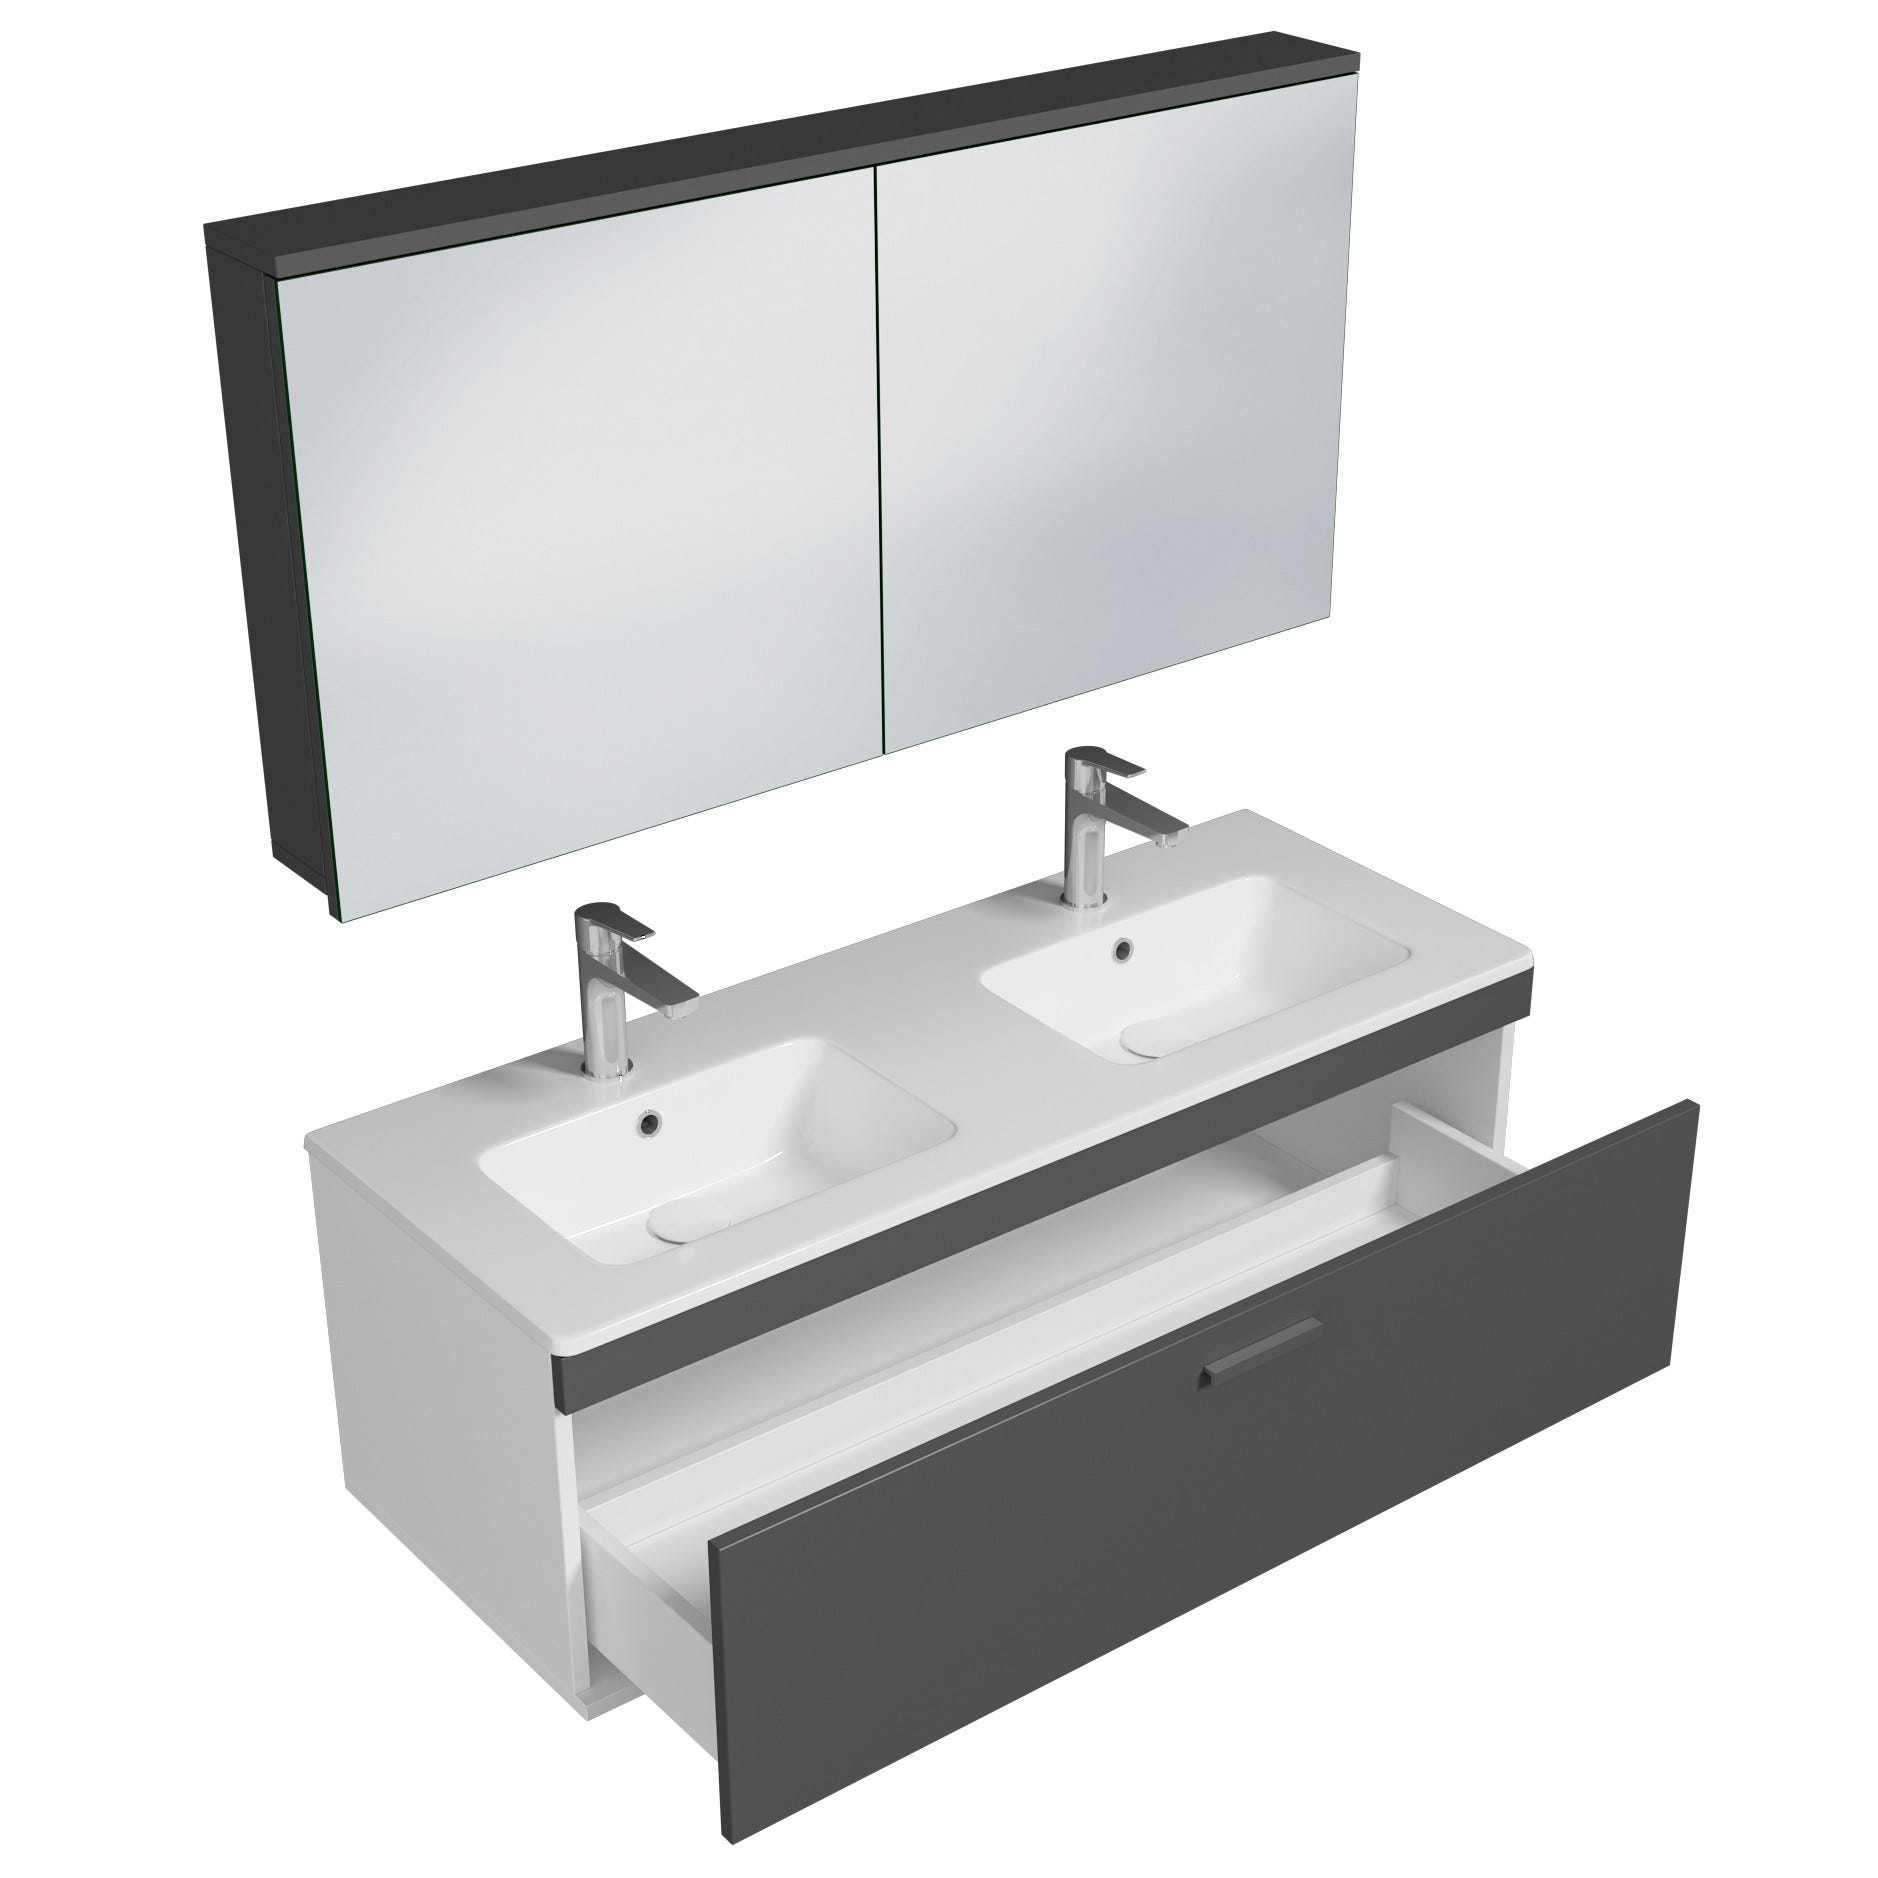 RUBITE Meuble salle de bain double vasque 1 tiroir gris anthracite largeur 120 cm + miroir armoire 1